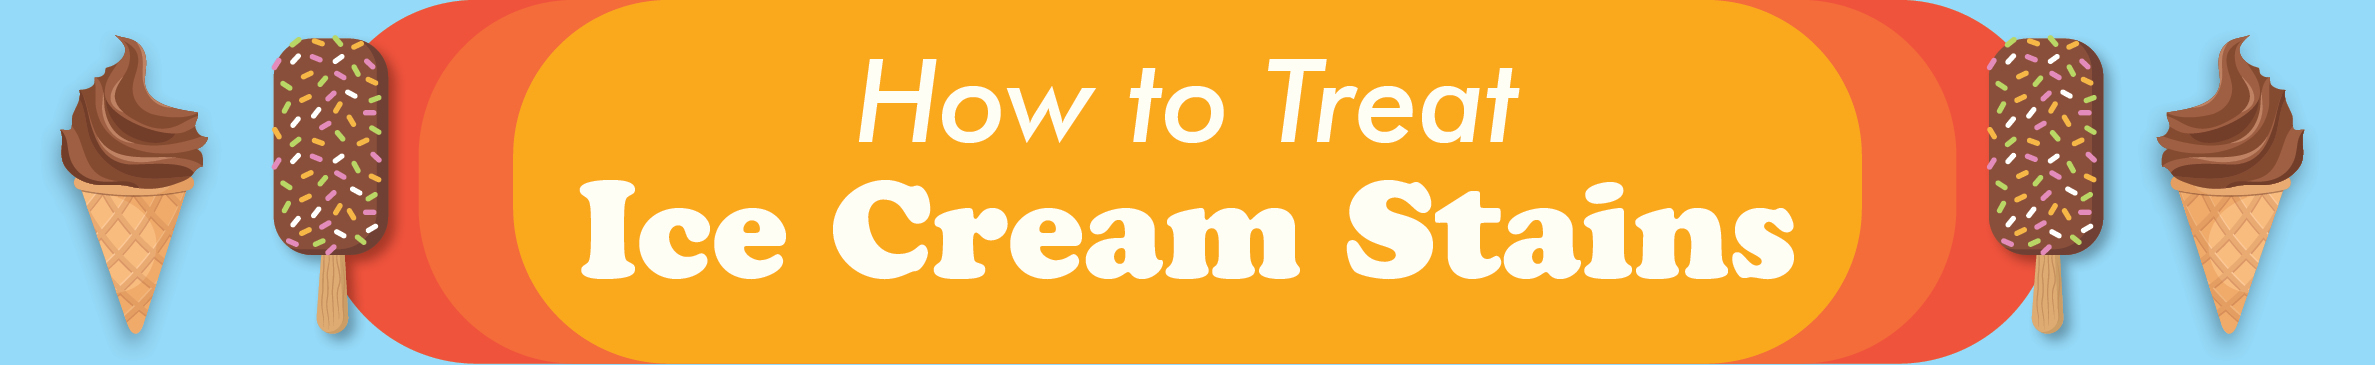 Illustrated headline "How to Treat Ice Cream Stains" on orange background with ice cream treats. 